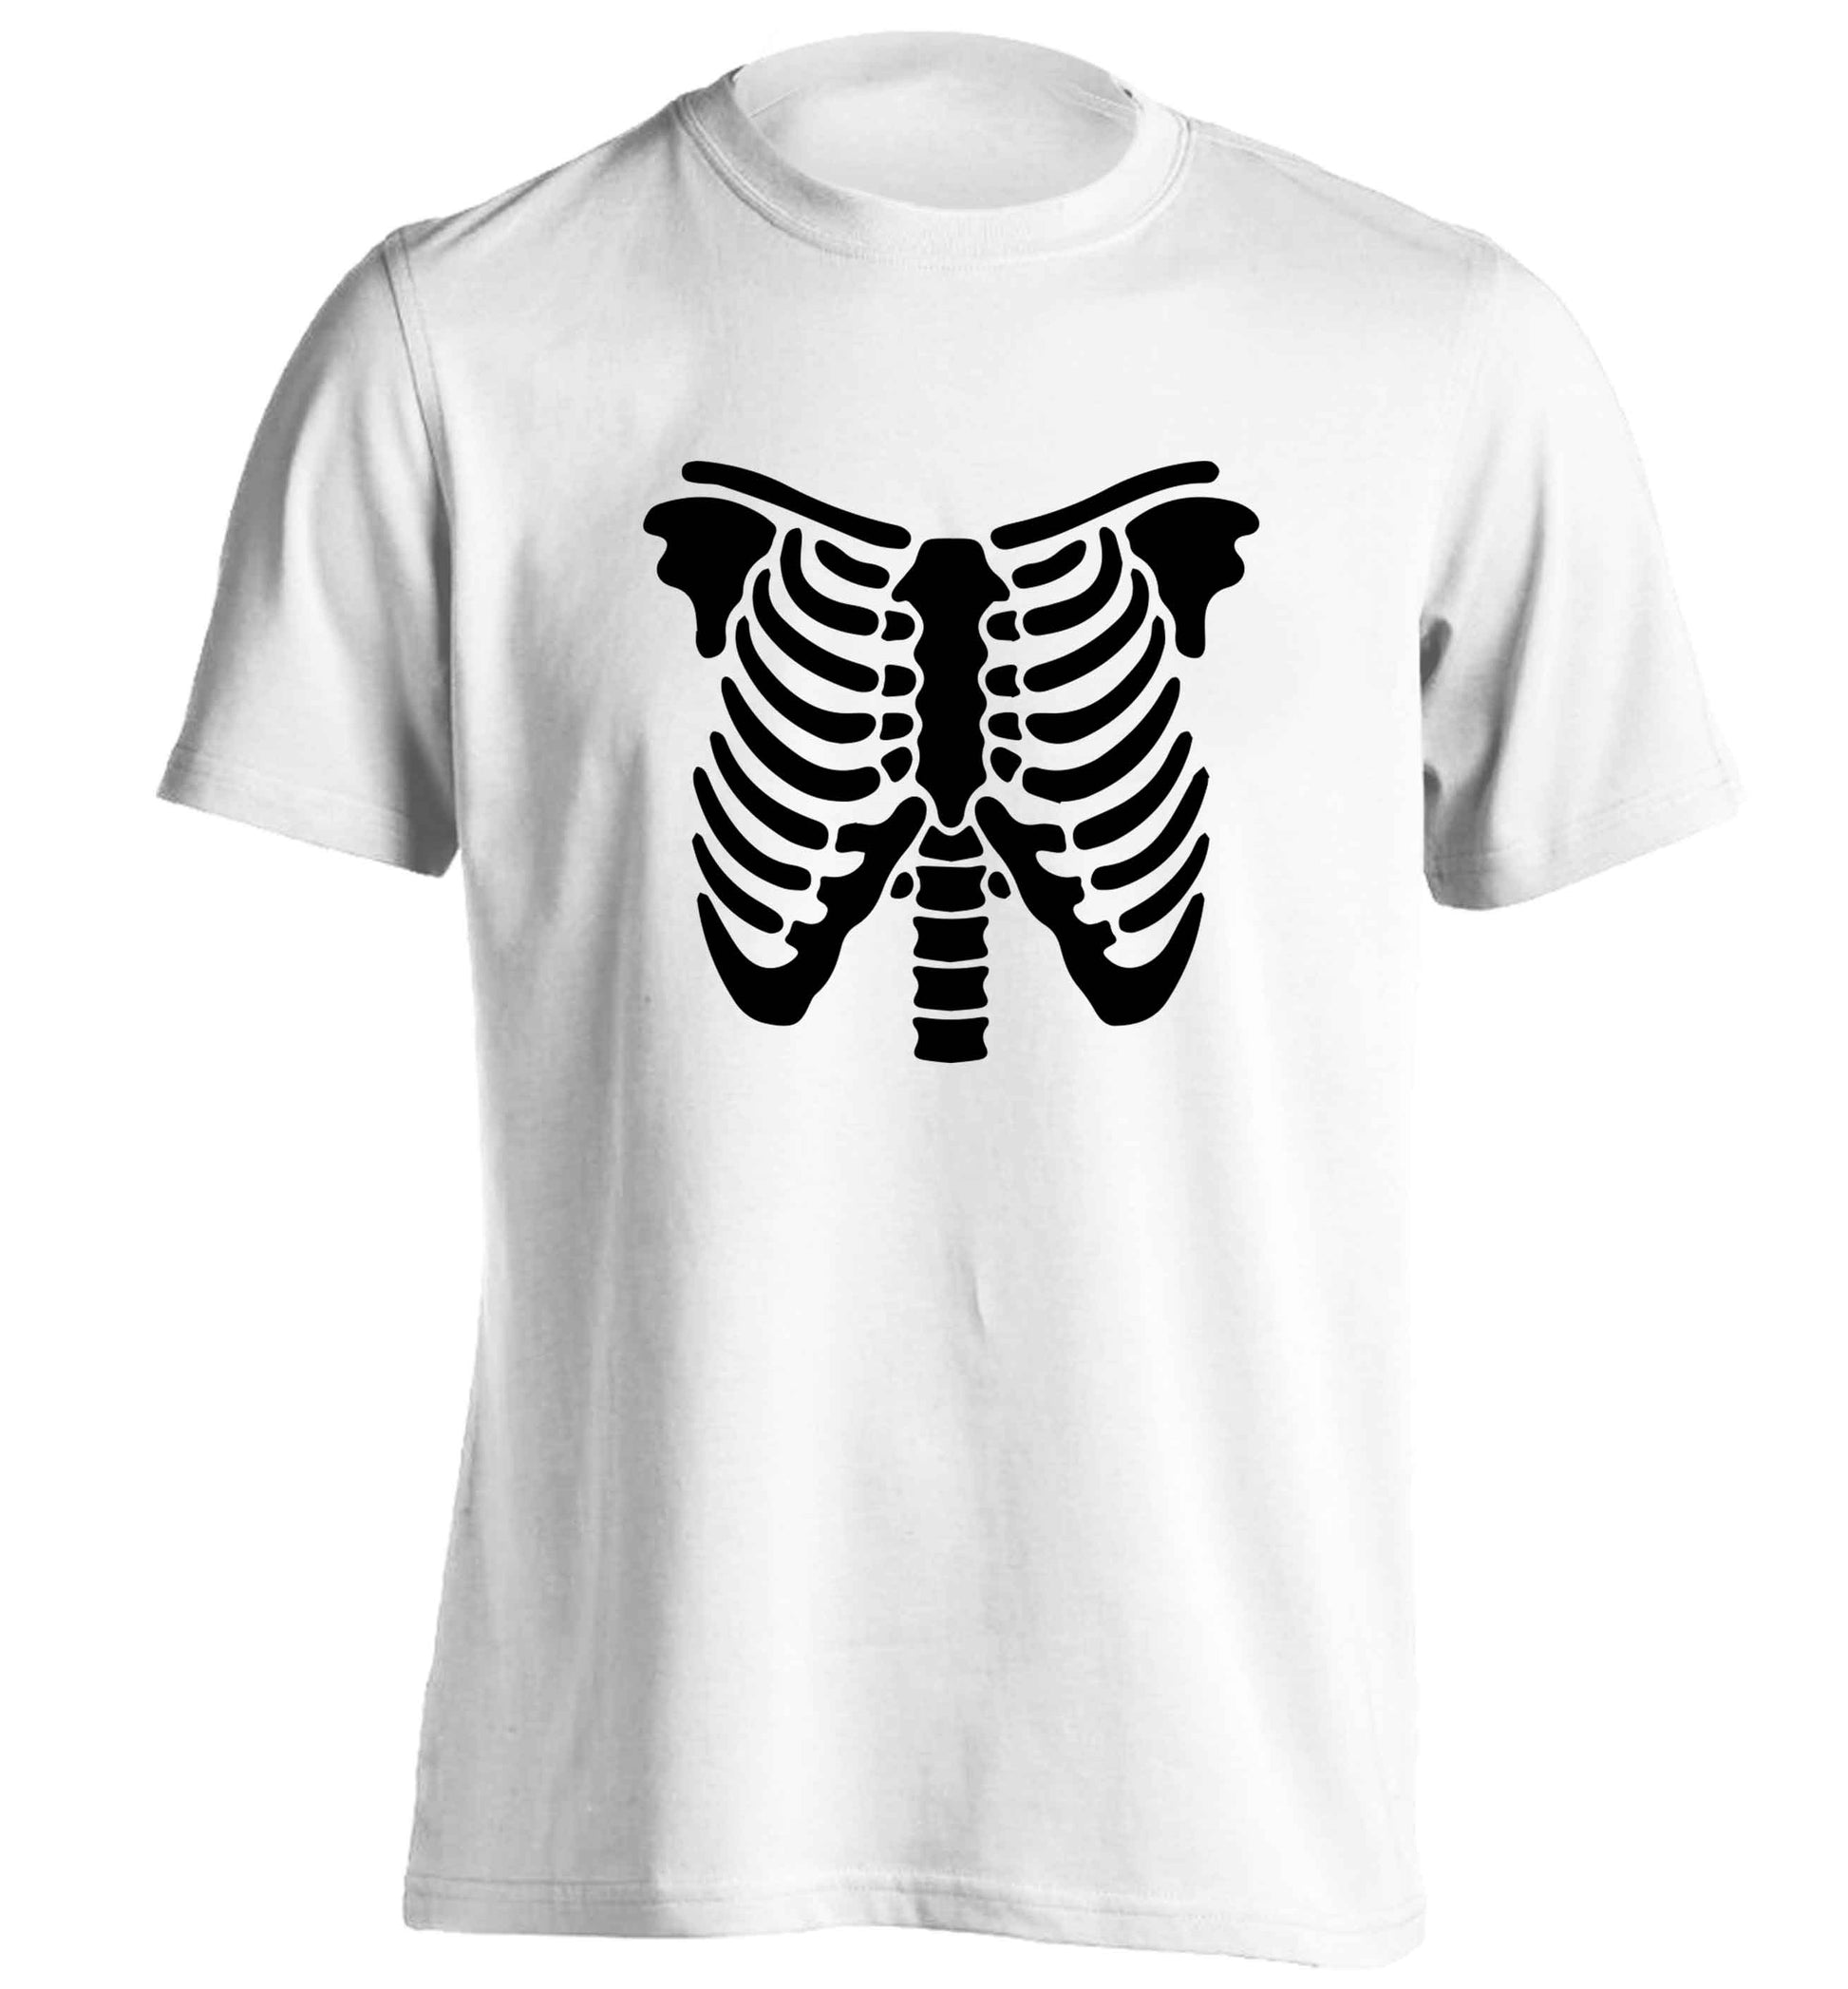 Skeleton ribcage adults unisex white Tshirt 2XL